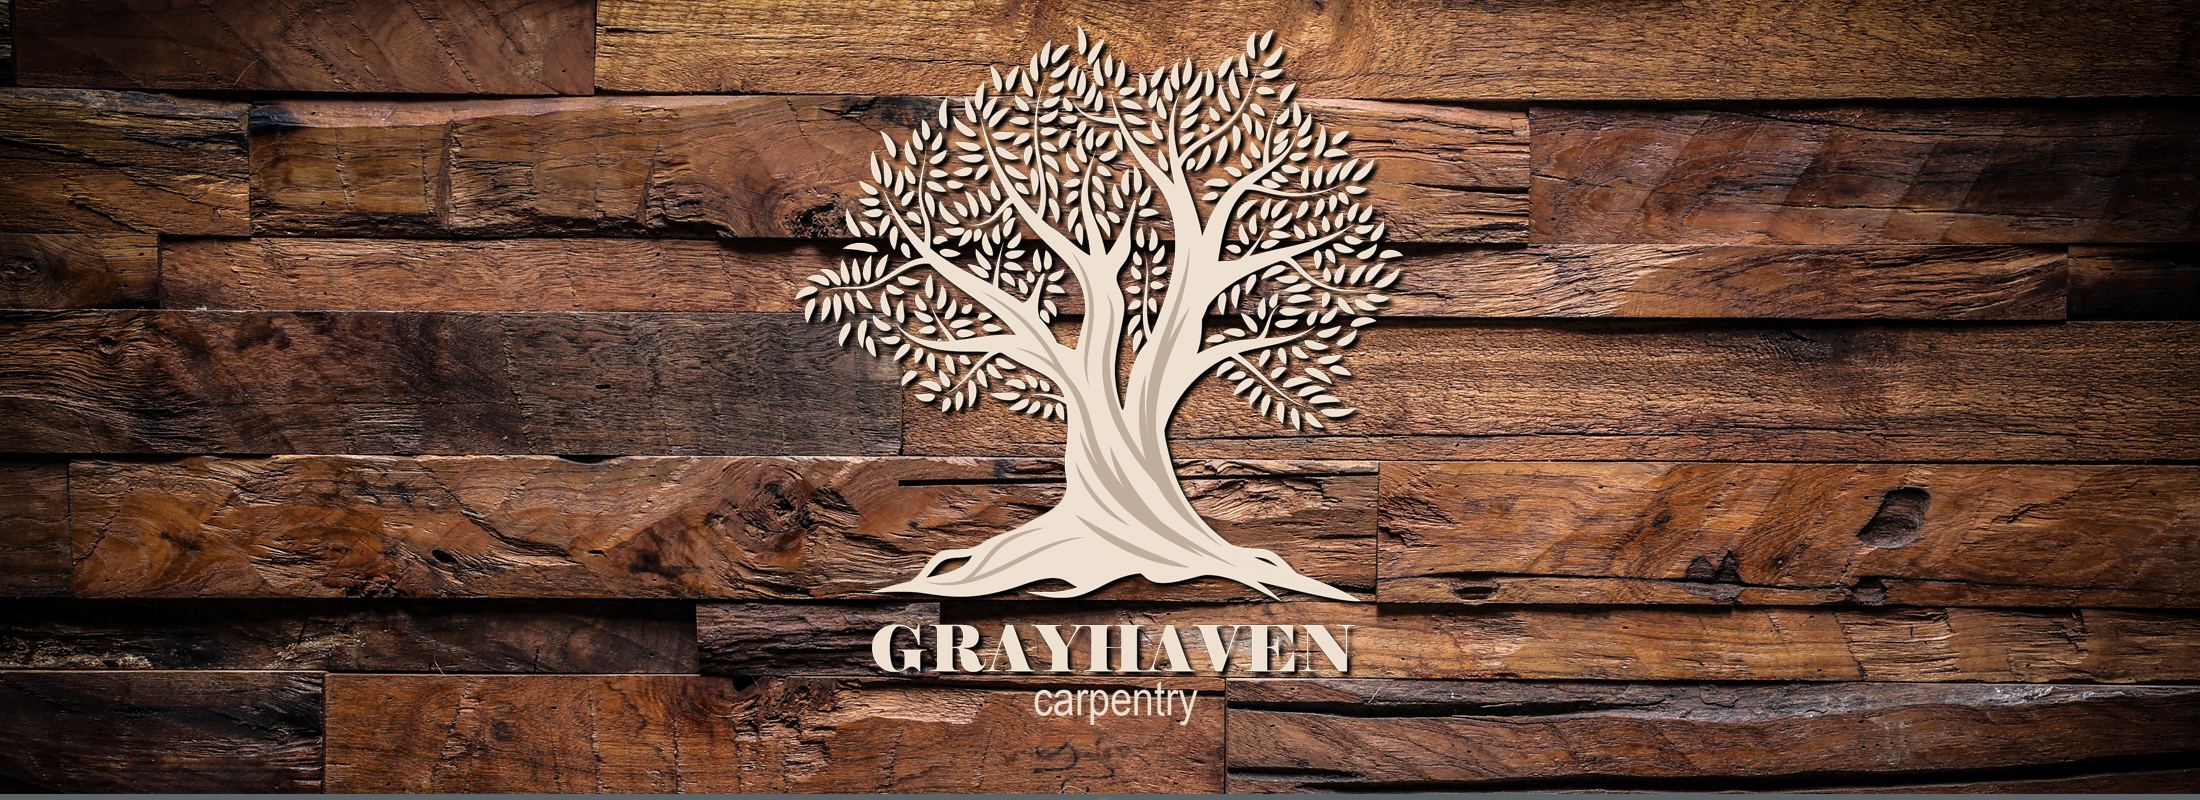 GrayHaven Carpentry